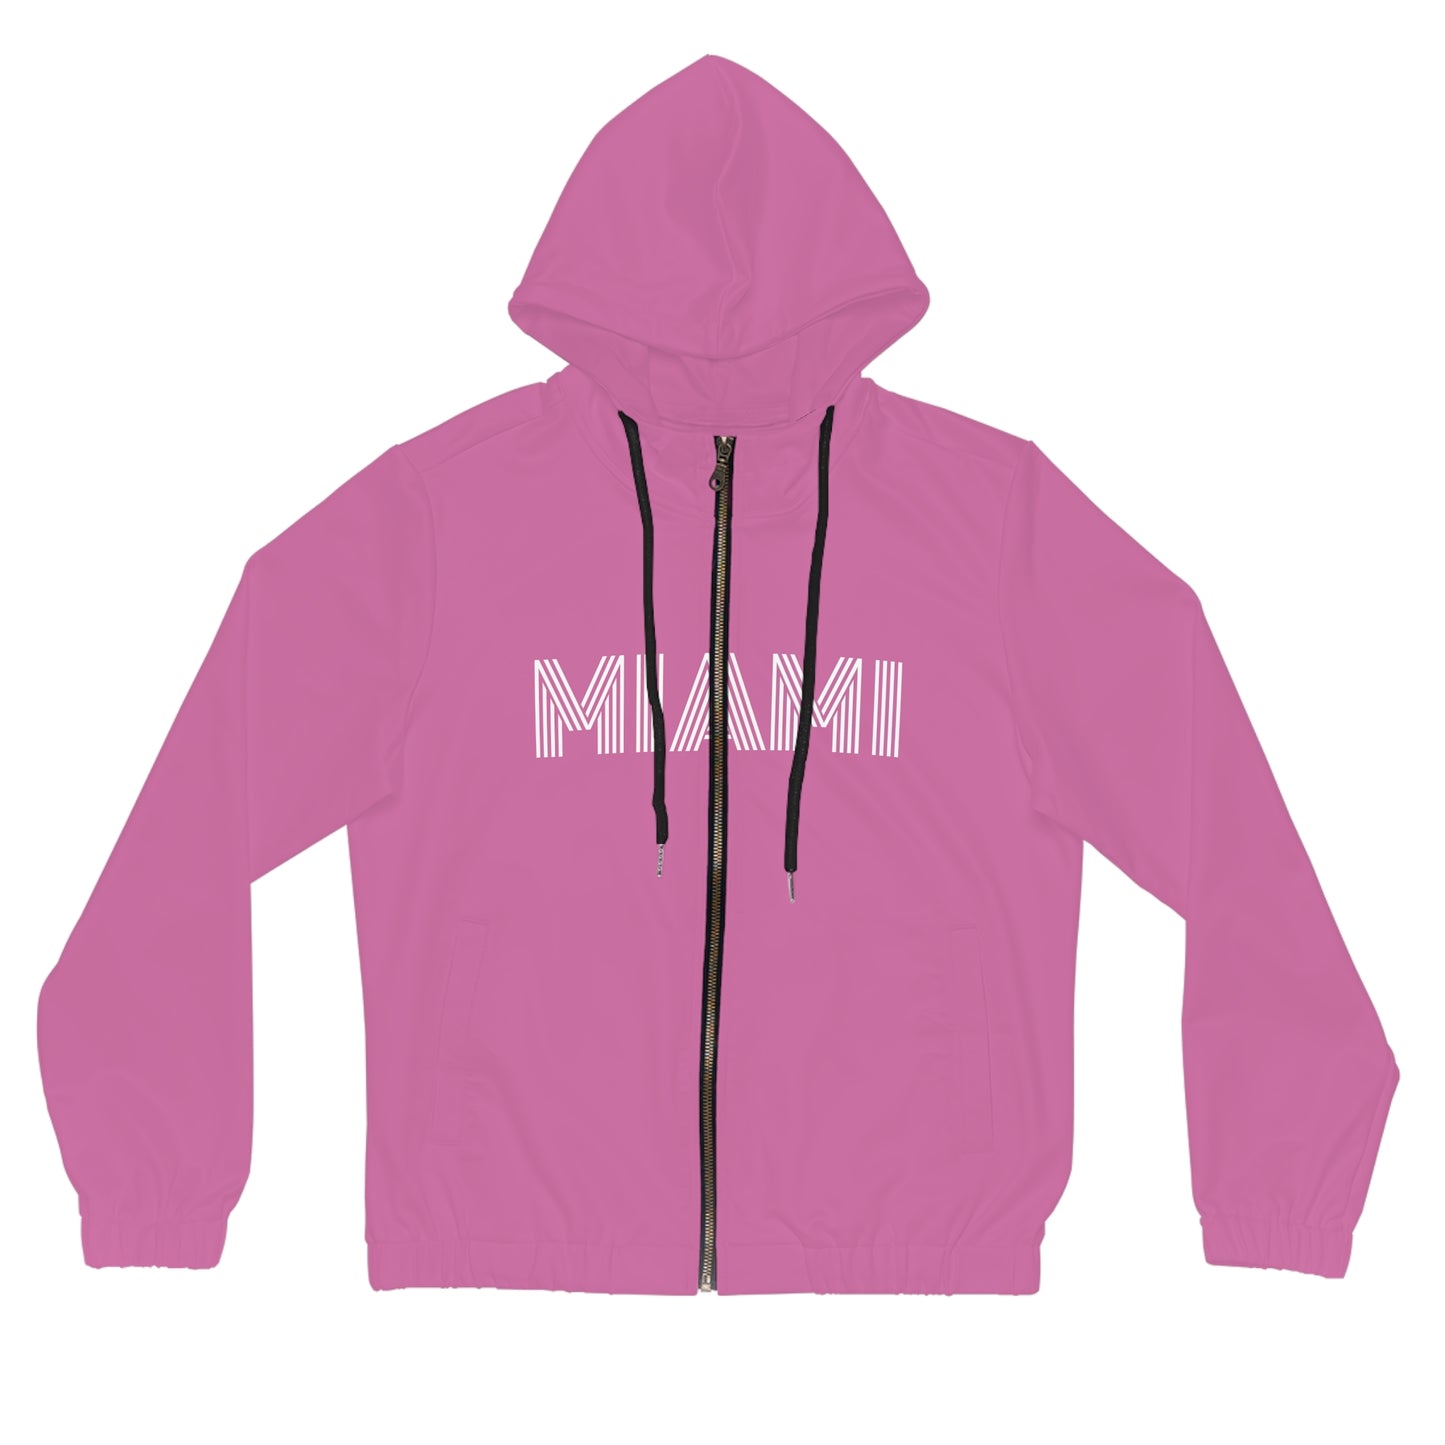 MIAMI Women’s Full-Zip Hoodie, Pink